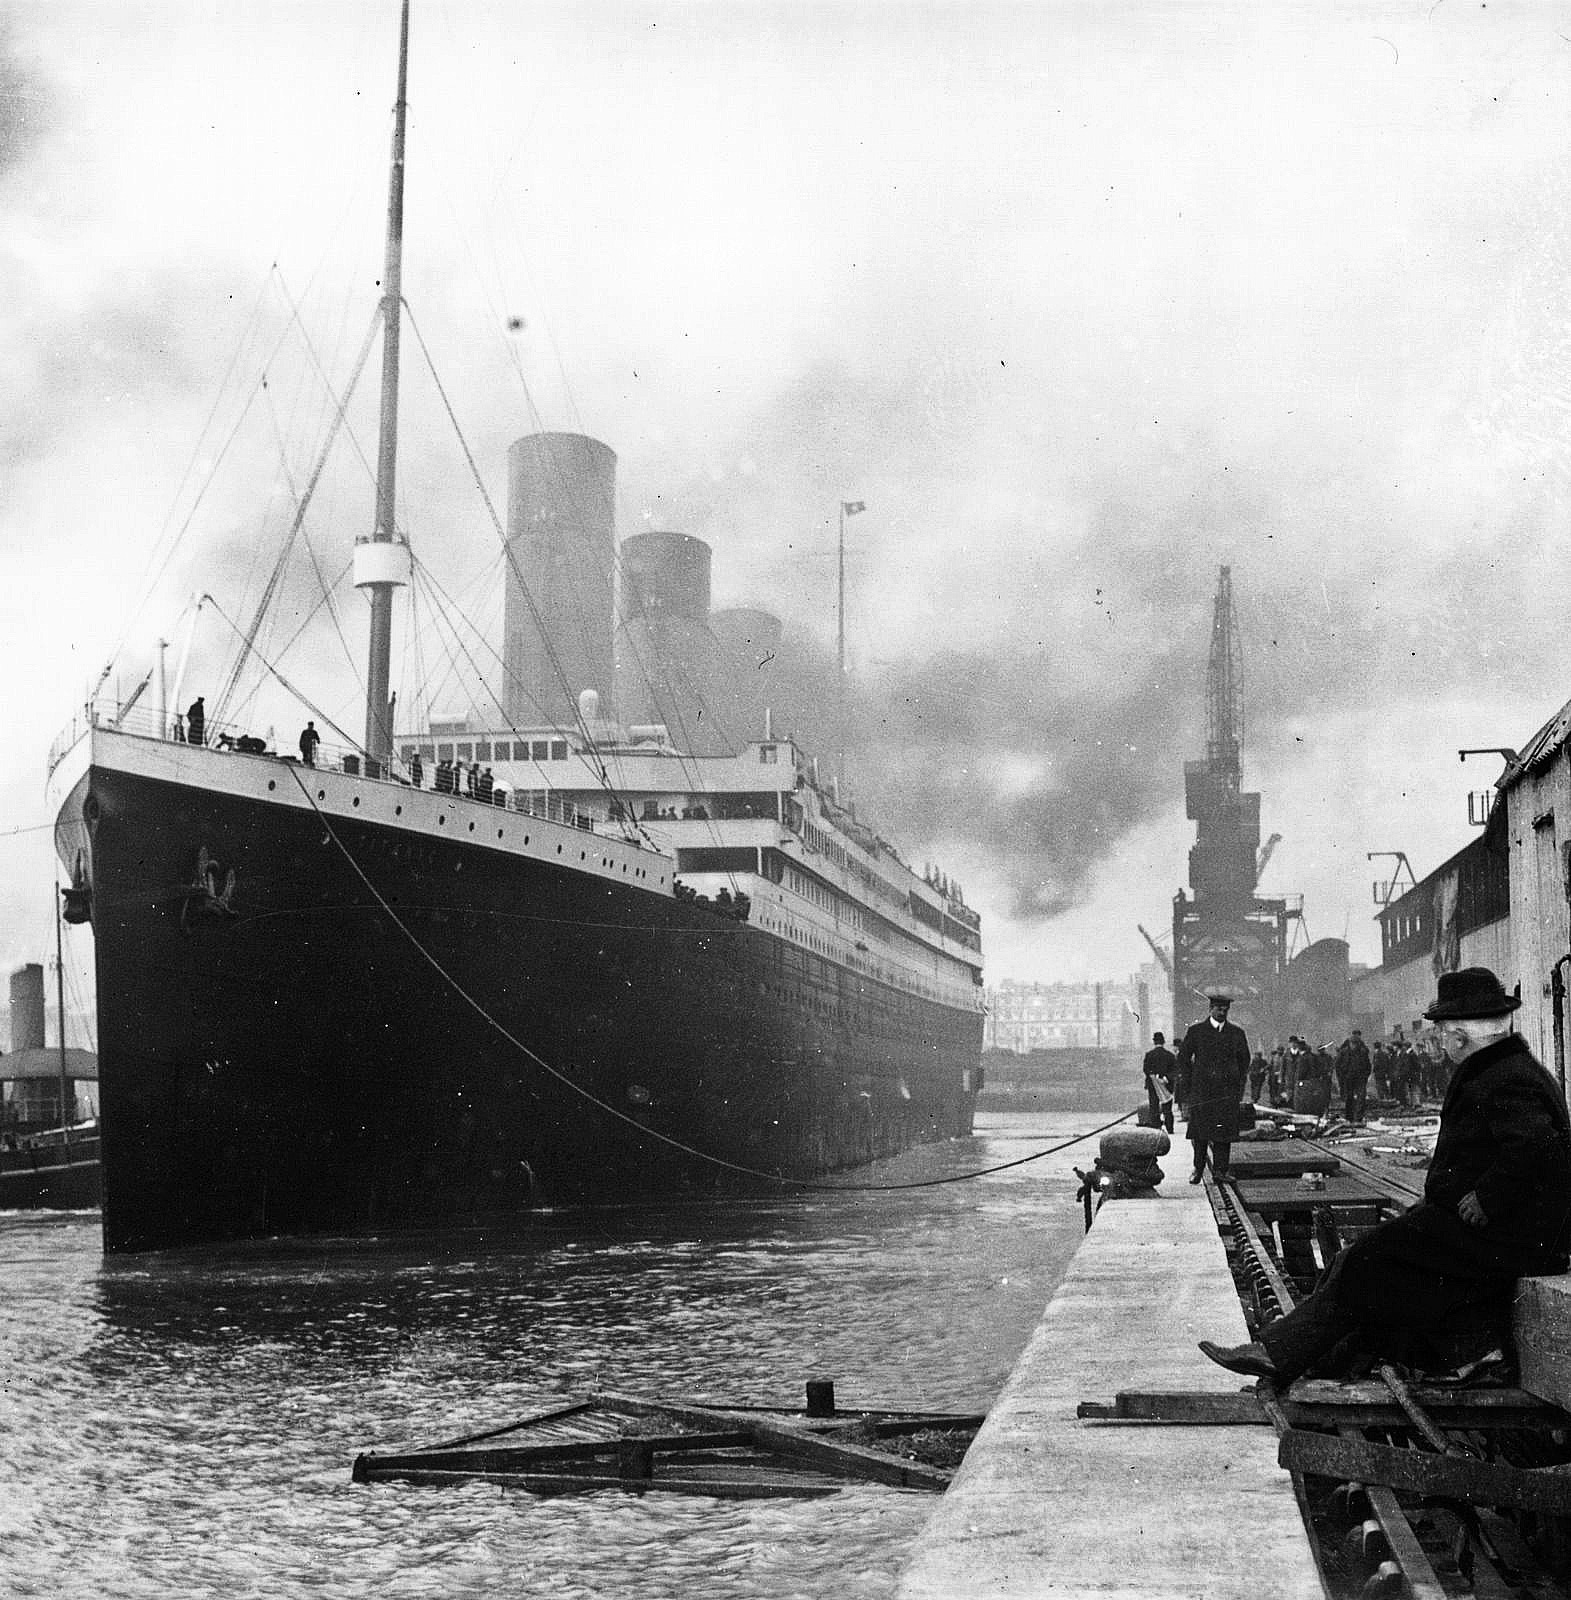 The Titanic in Dock